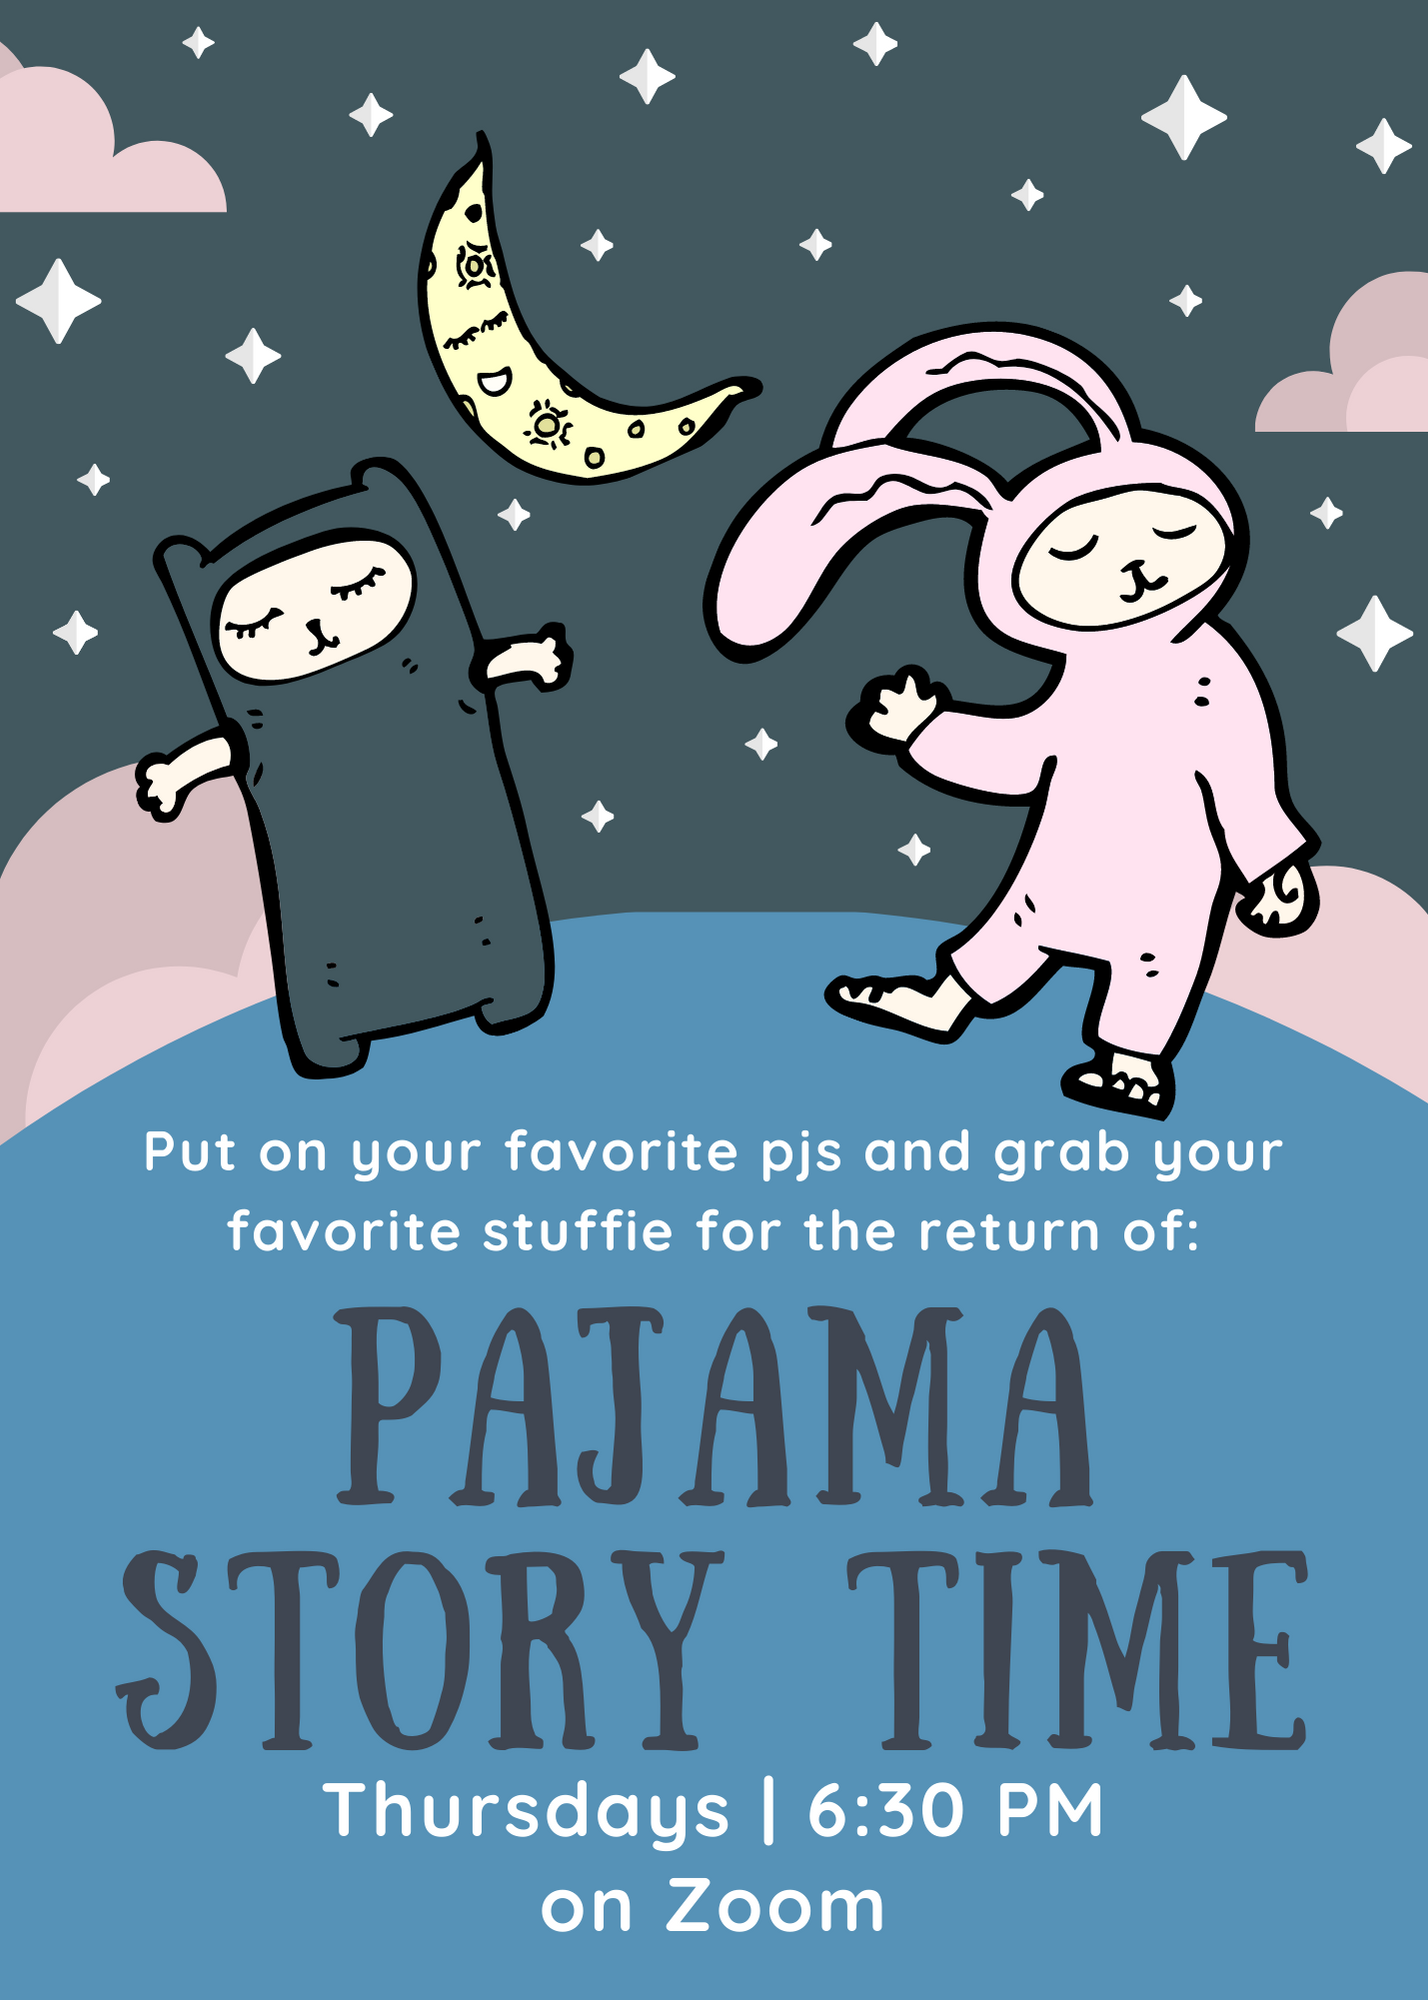 Pajama Story Time Thursdays at 6:30 PM